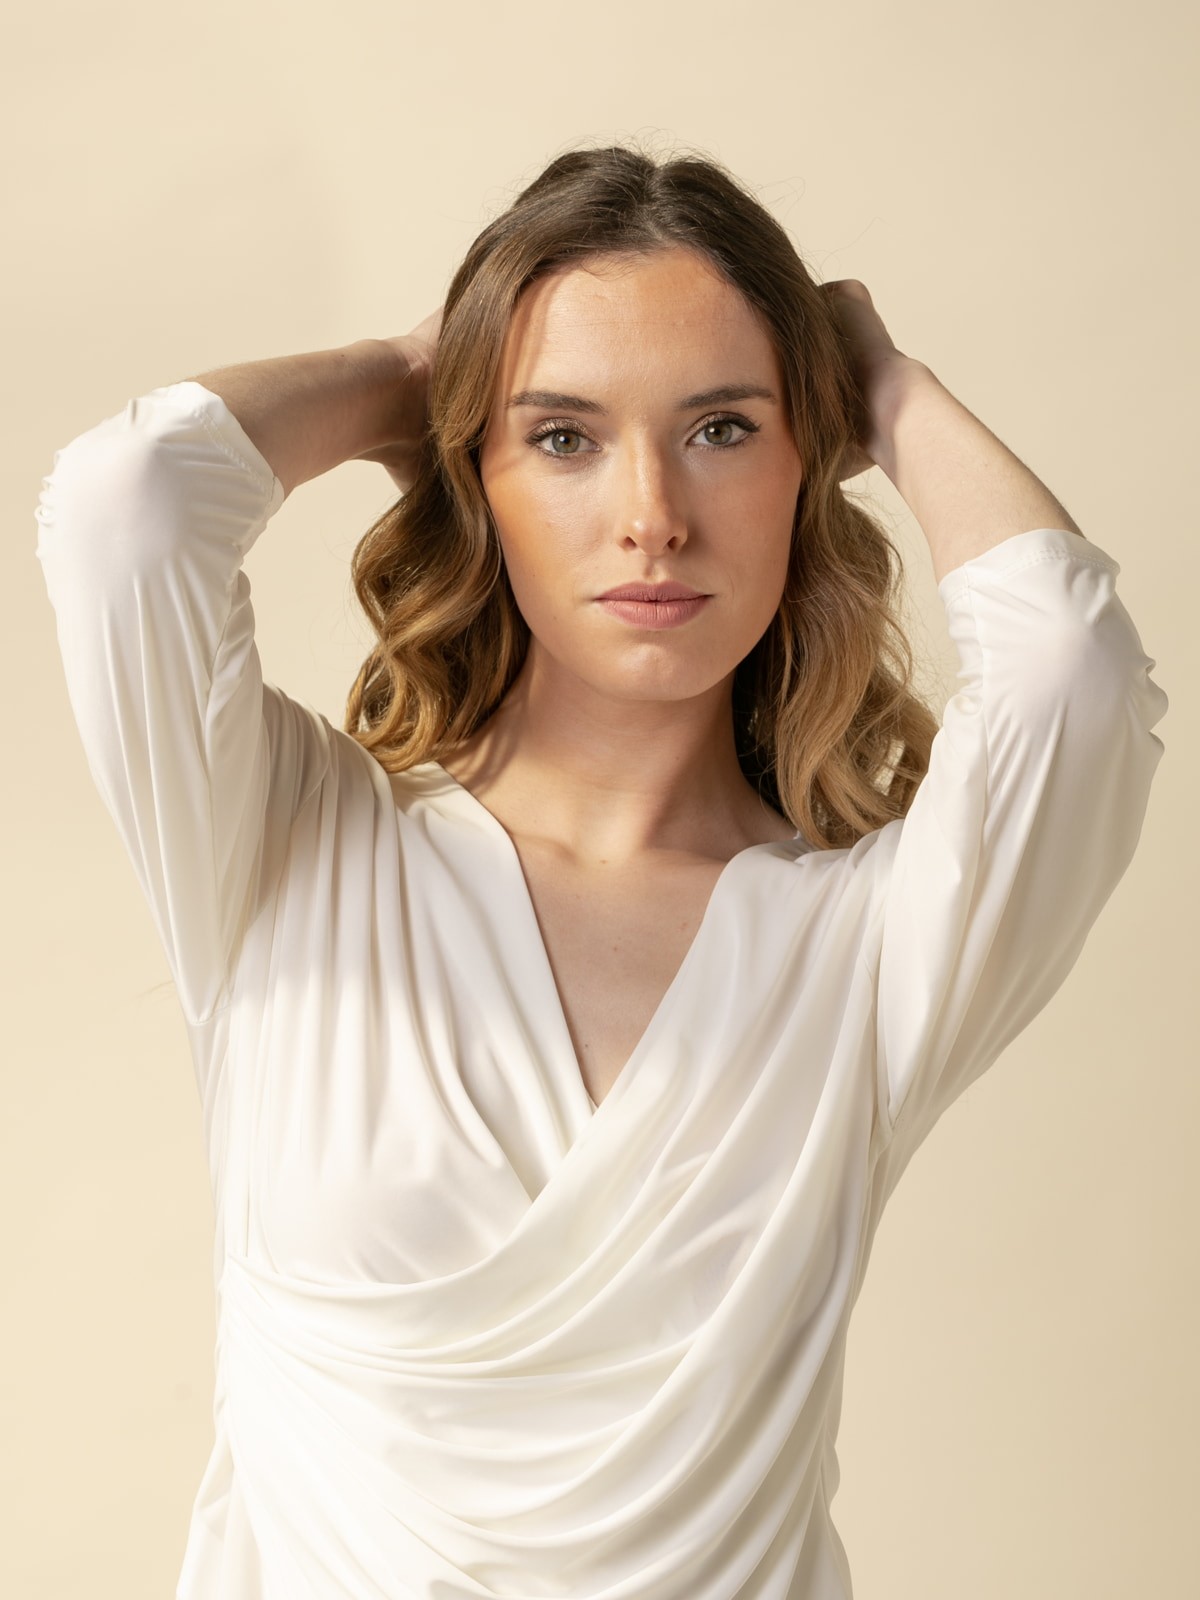 Woman Elbow-length sleeve plain draped T-shirt  Whitecolour